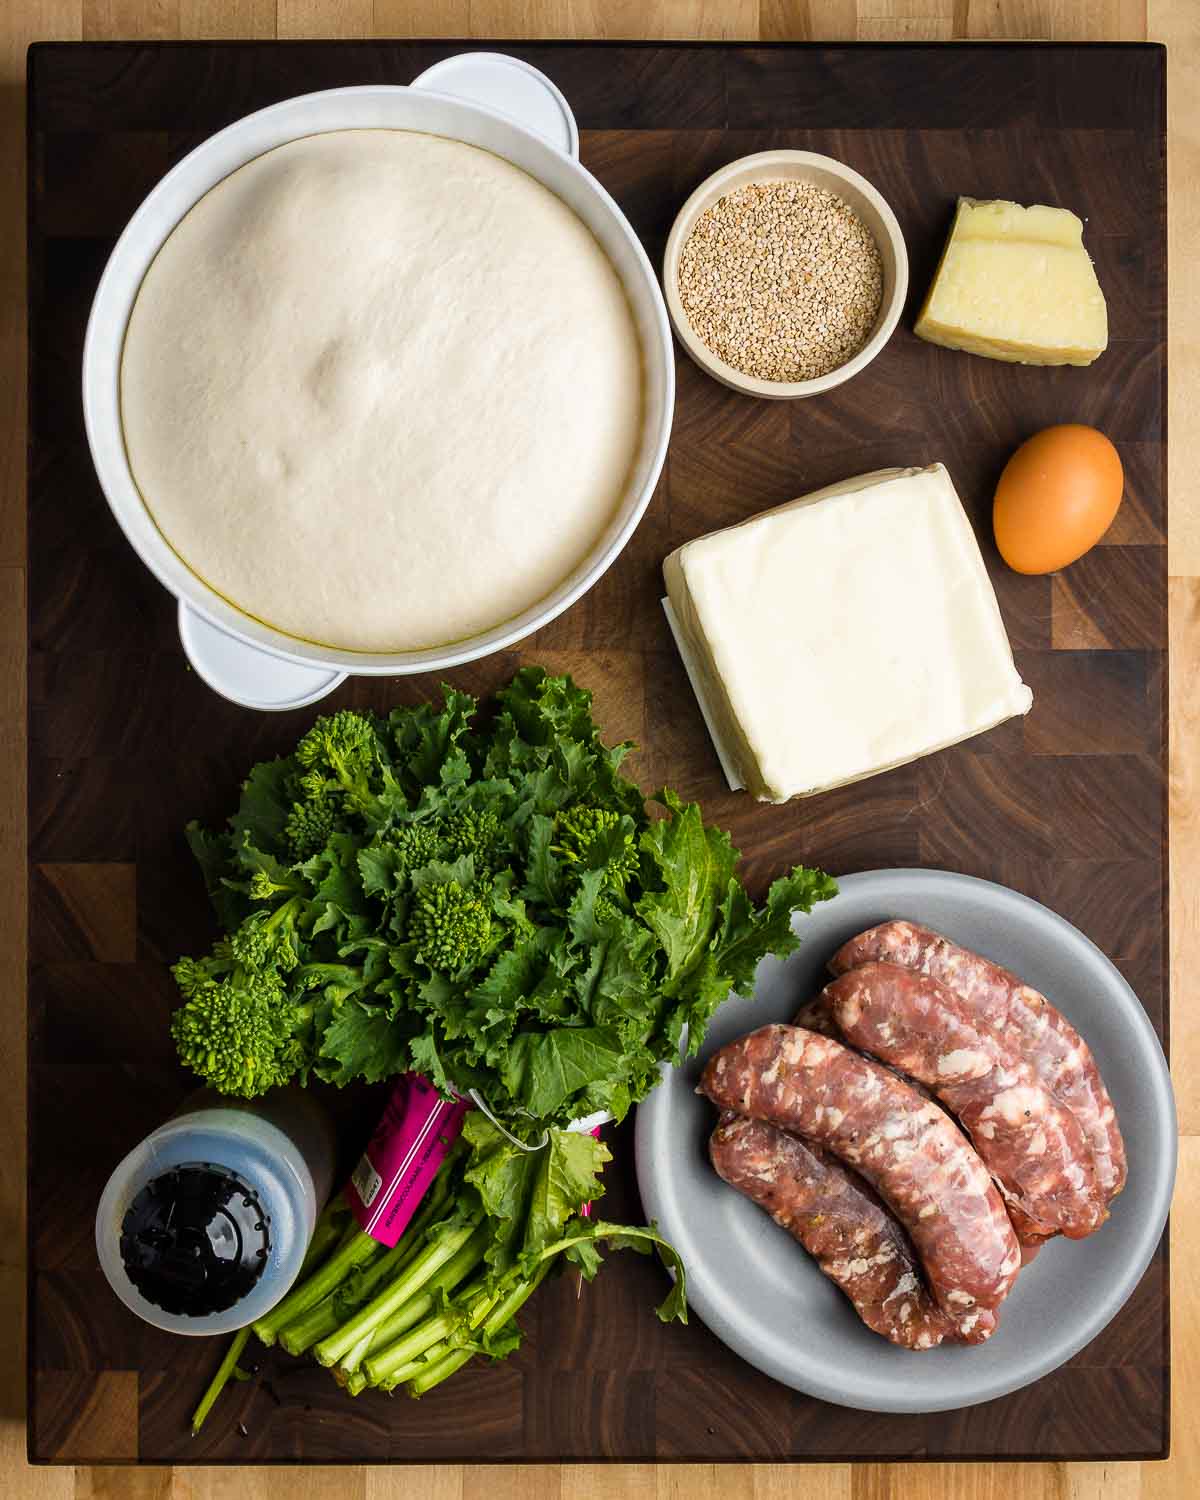 Ingredients shown: pizza dough, sesame seeds, Pecorino, mozzarella, egg, olive oil, broccoli rabe, and sausage links.